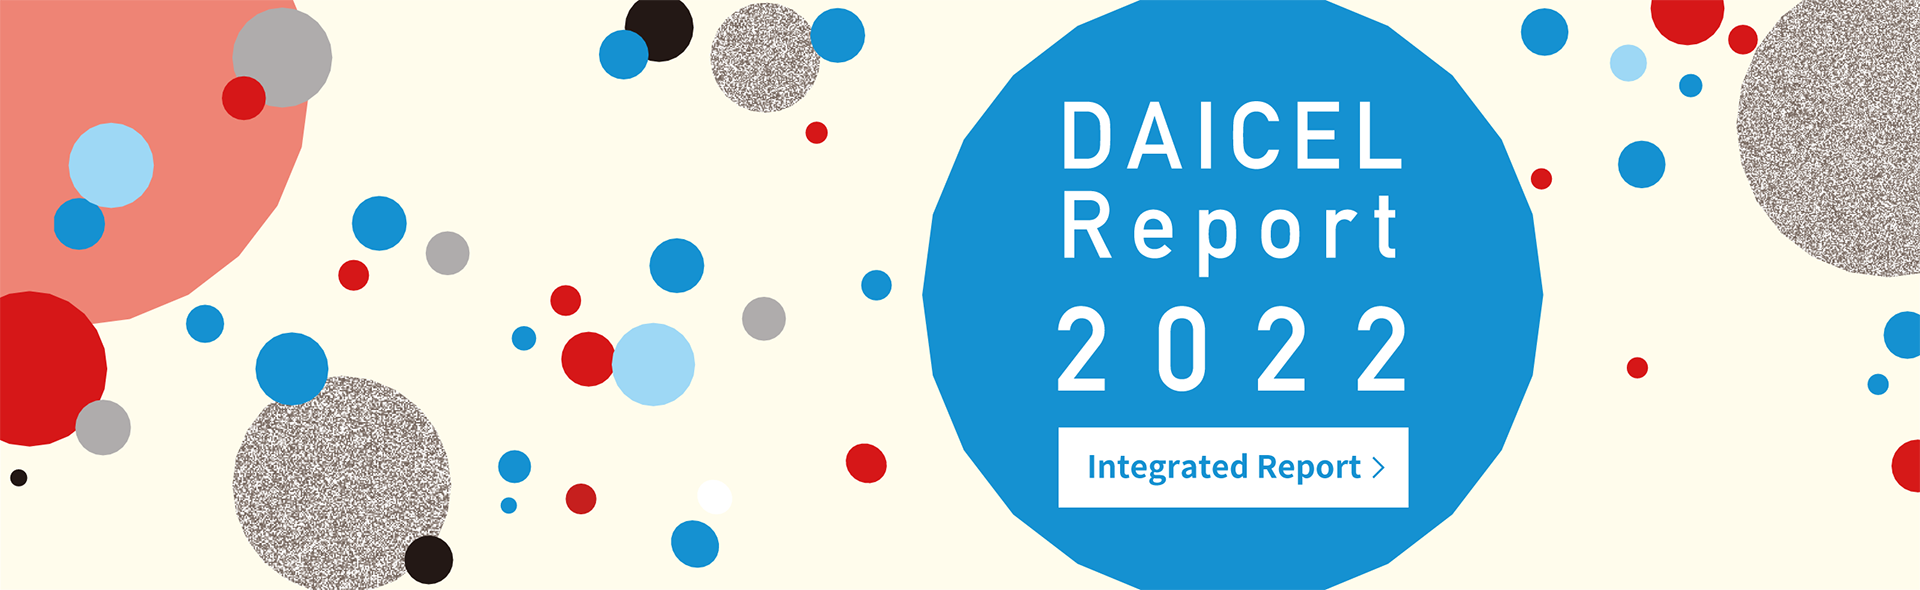 DAICEL Report 2022 Integrated Report